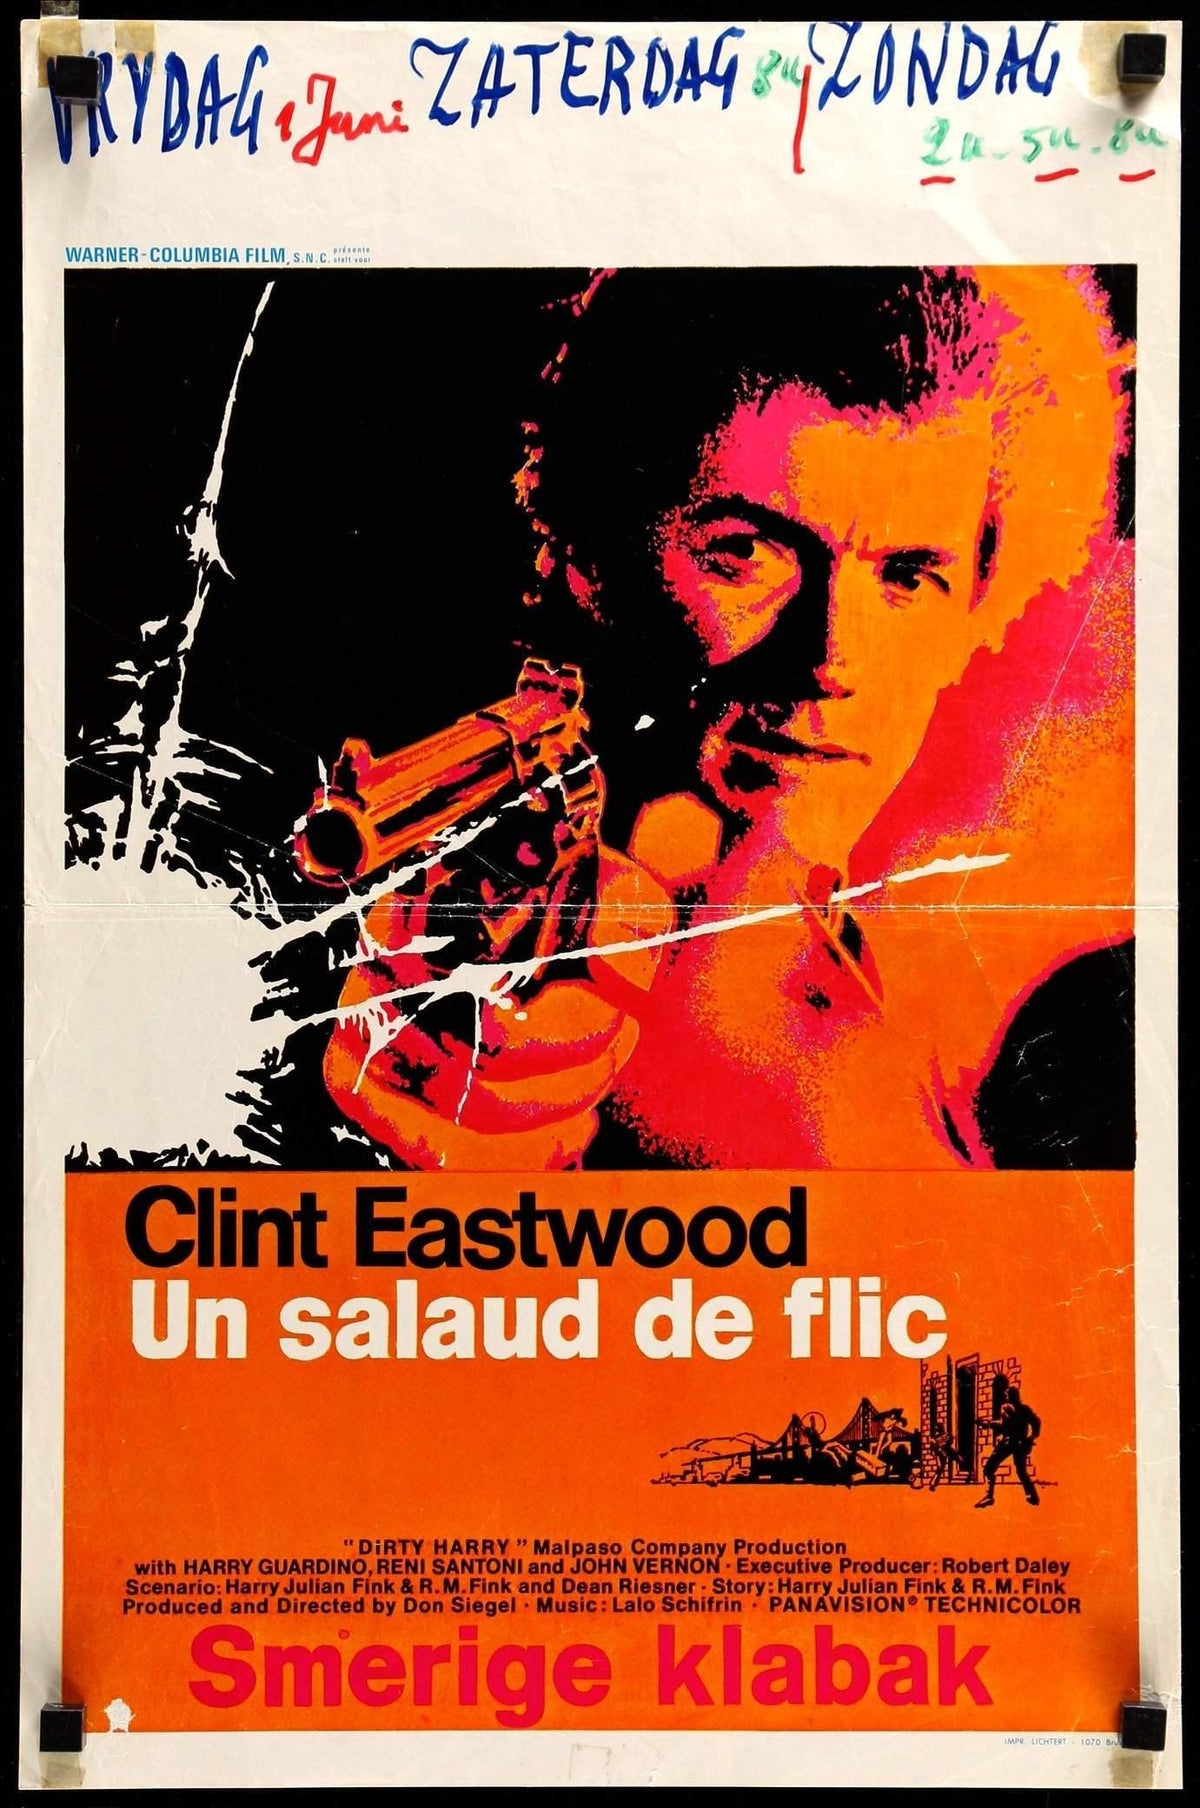 Dirty Harry (1971) original movie poster for sale at Original Film Art